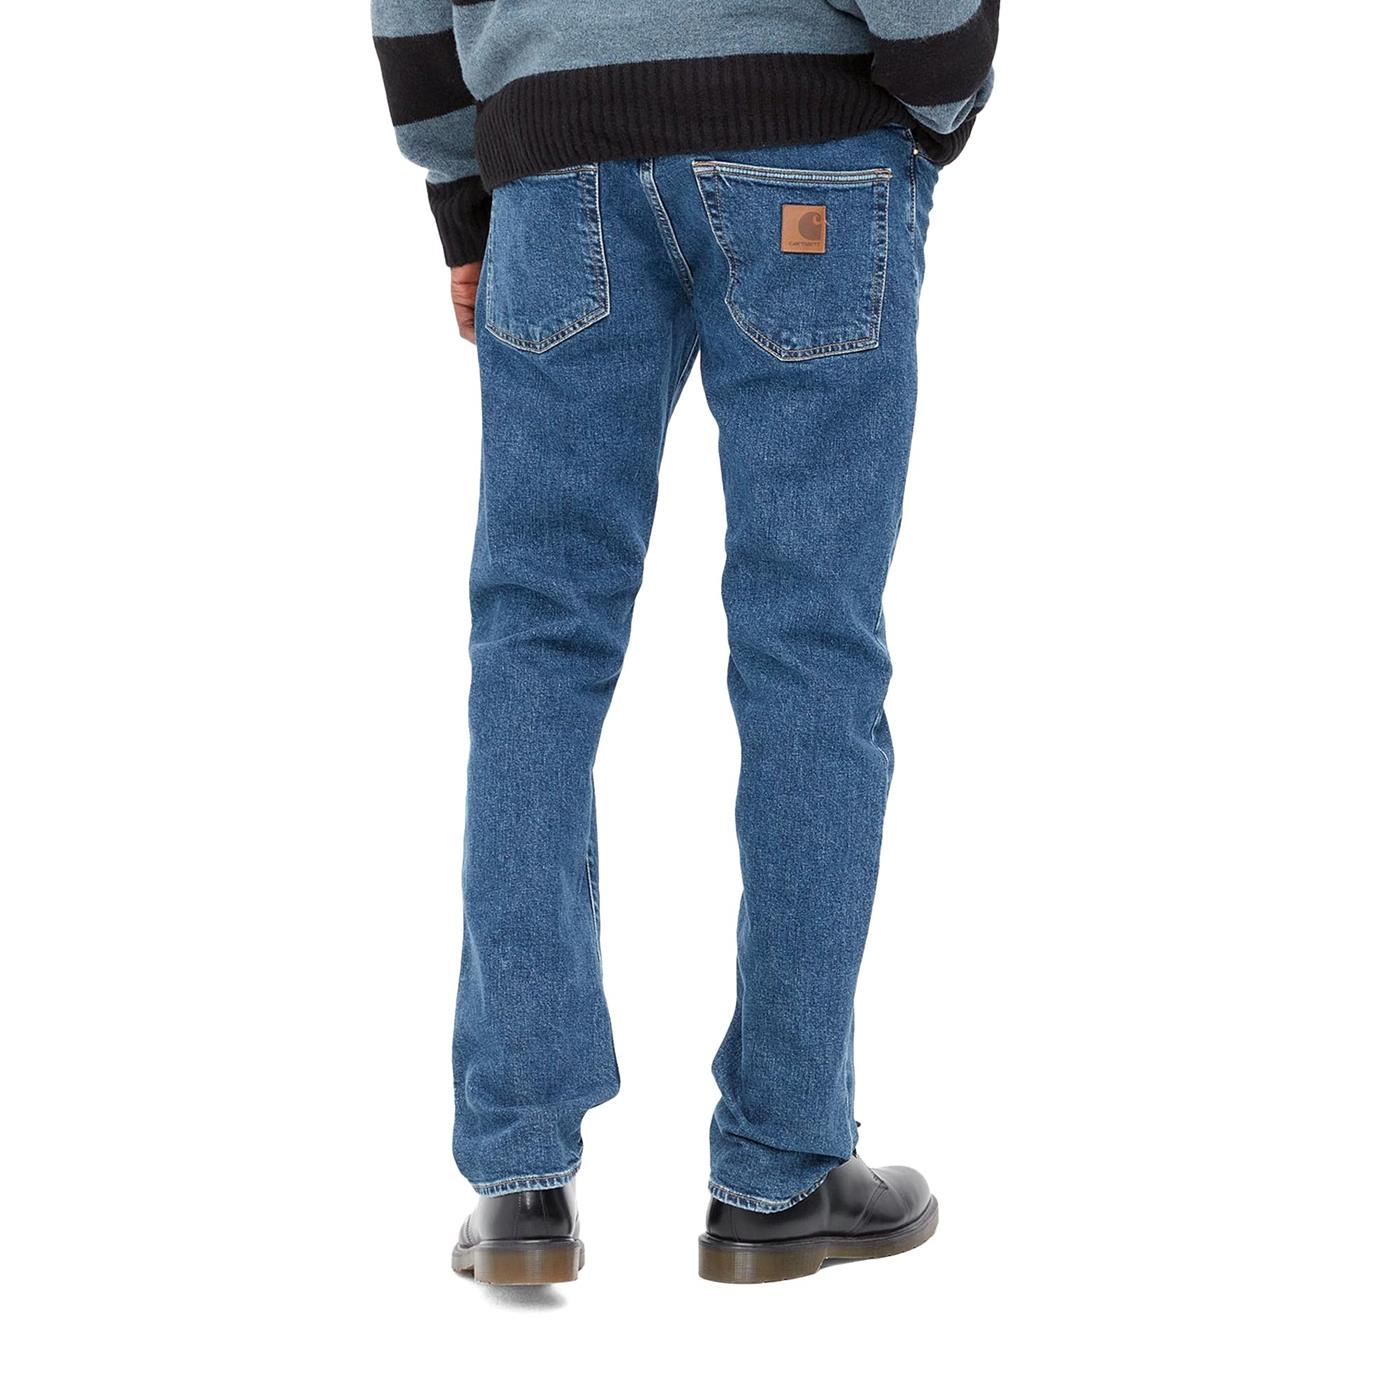 Pants CARHARTT Klondike Pant Blue for Man | I0248980106 | XTREME.PT